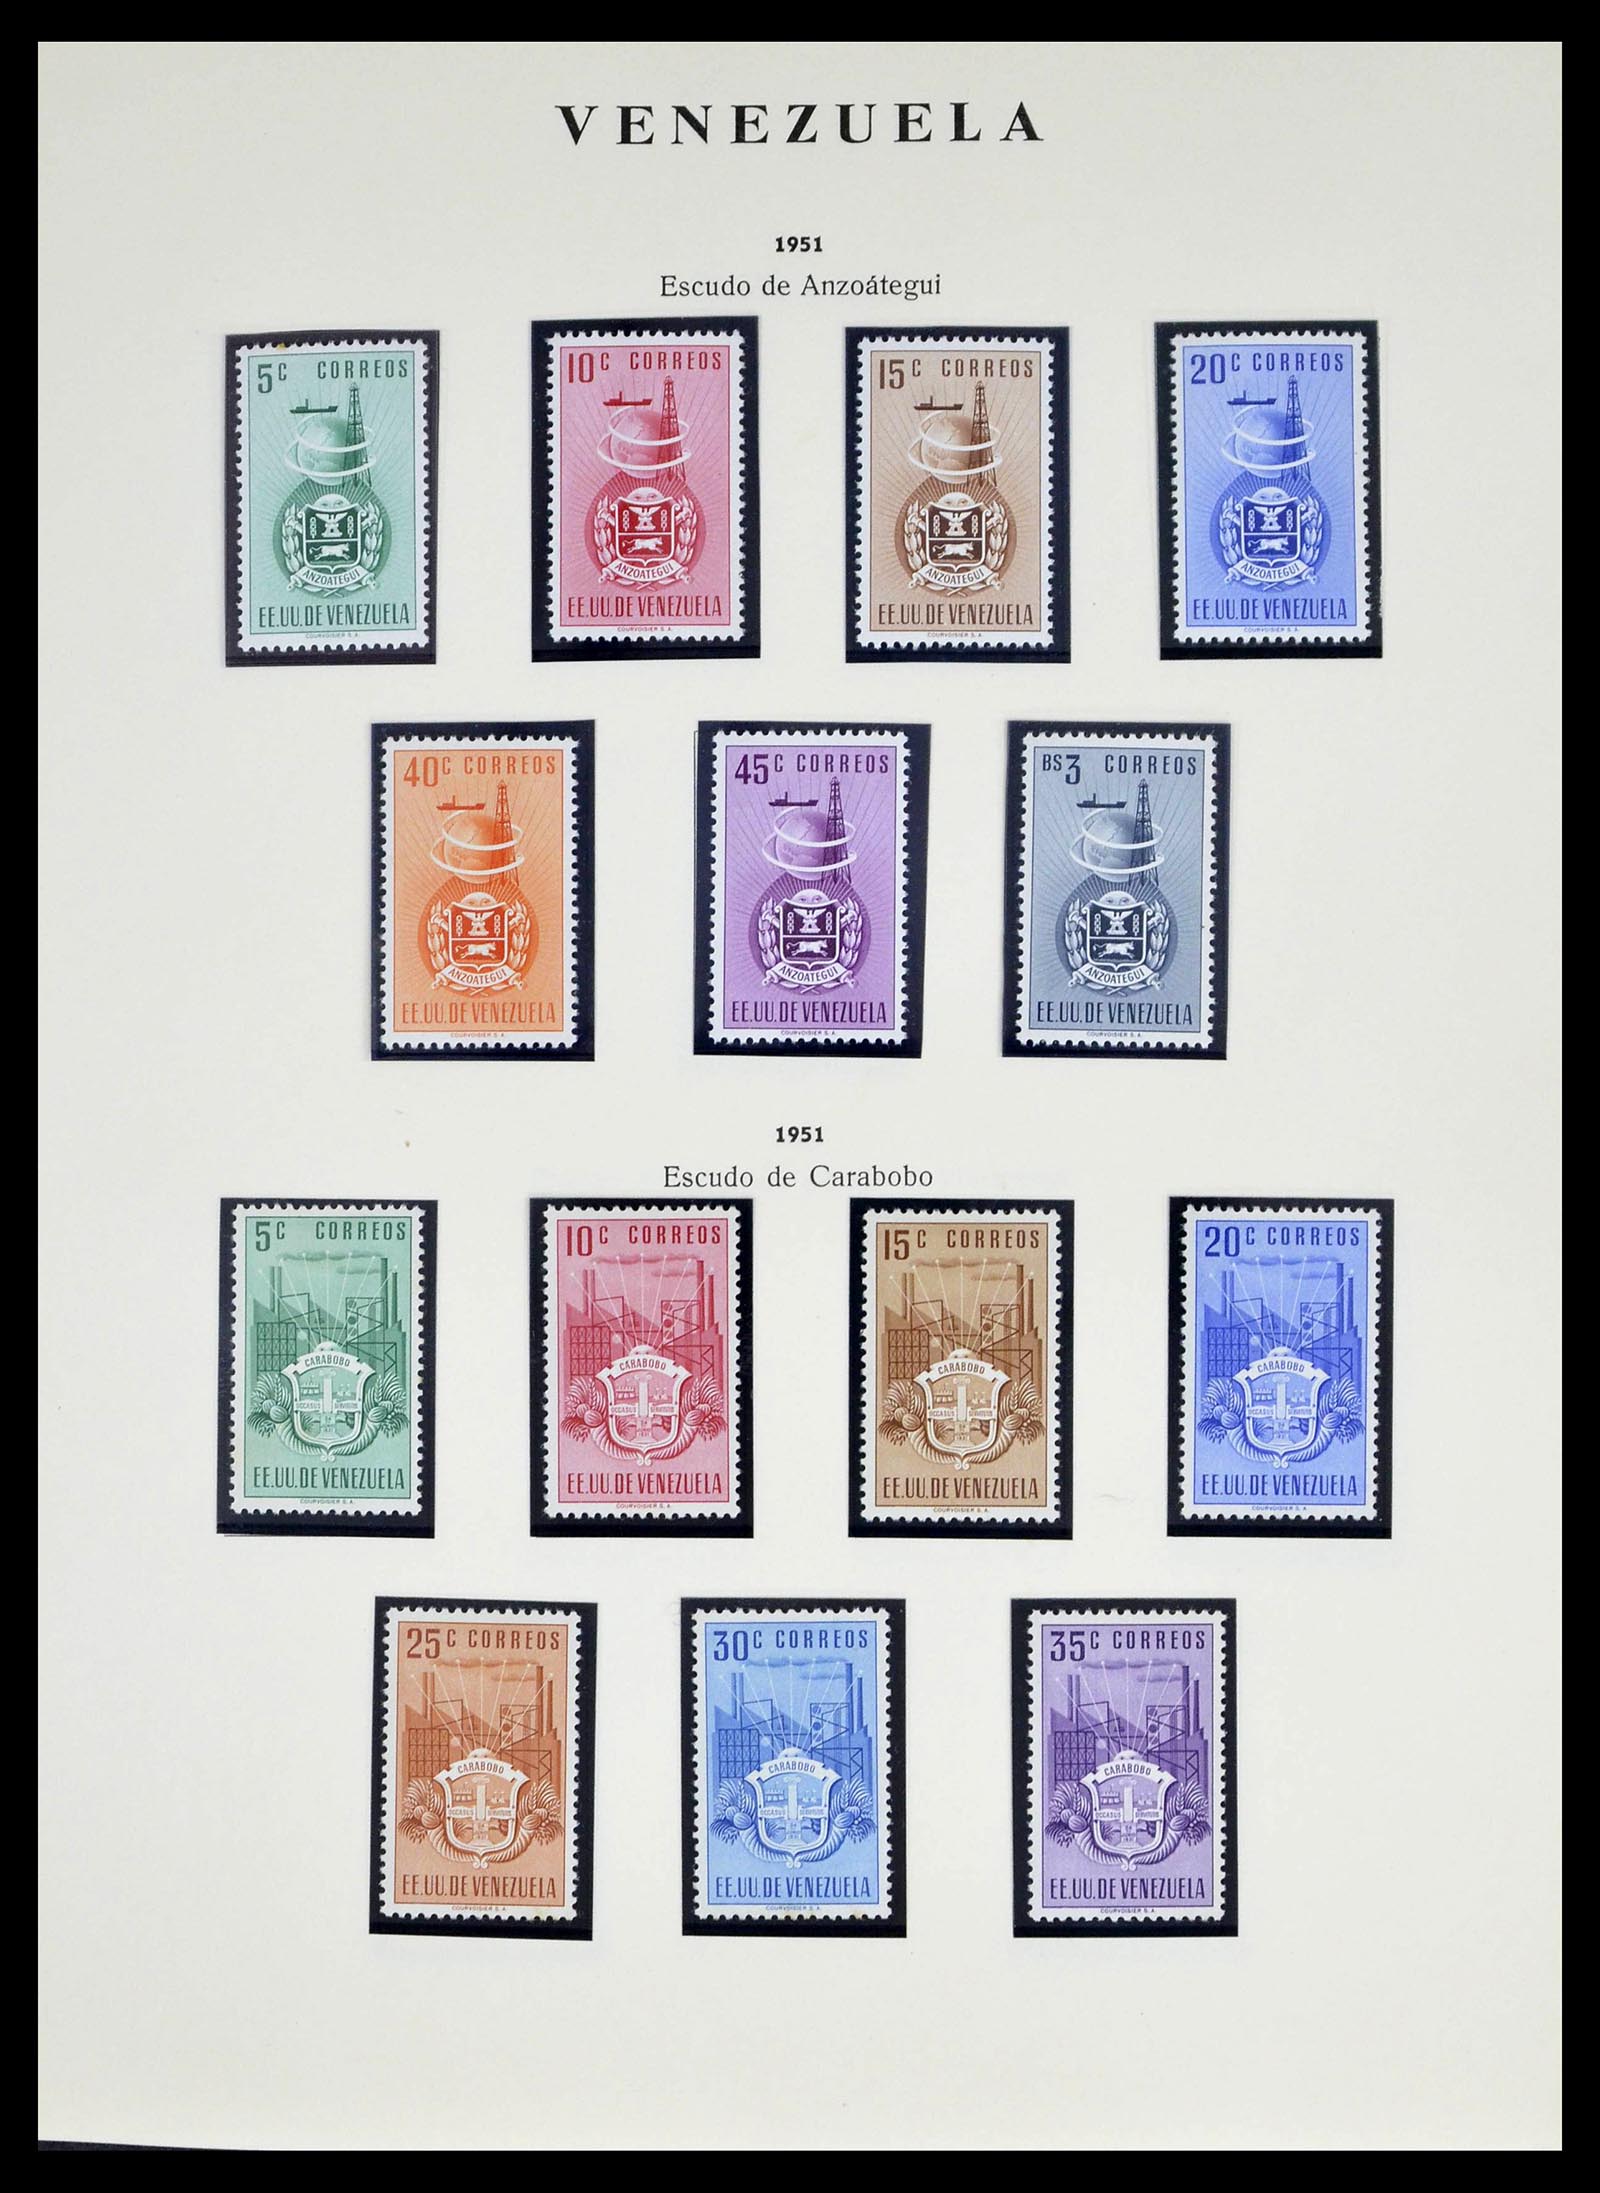 39223 0024 - Stamp collection 39223 Venezuela 1859-1984.